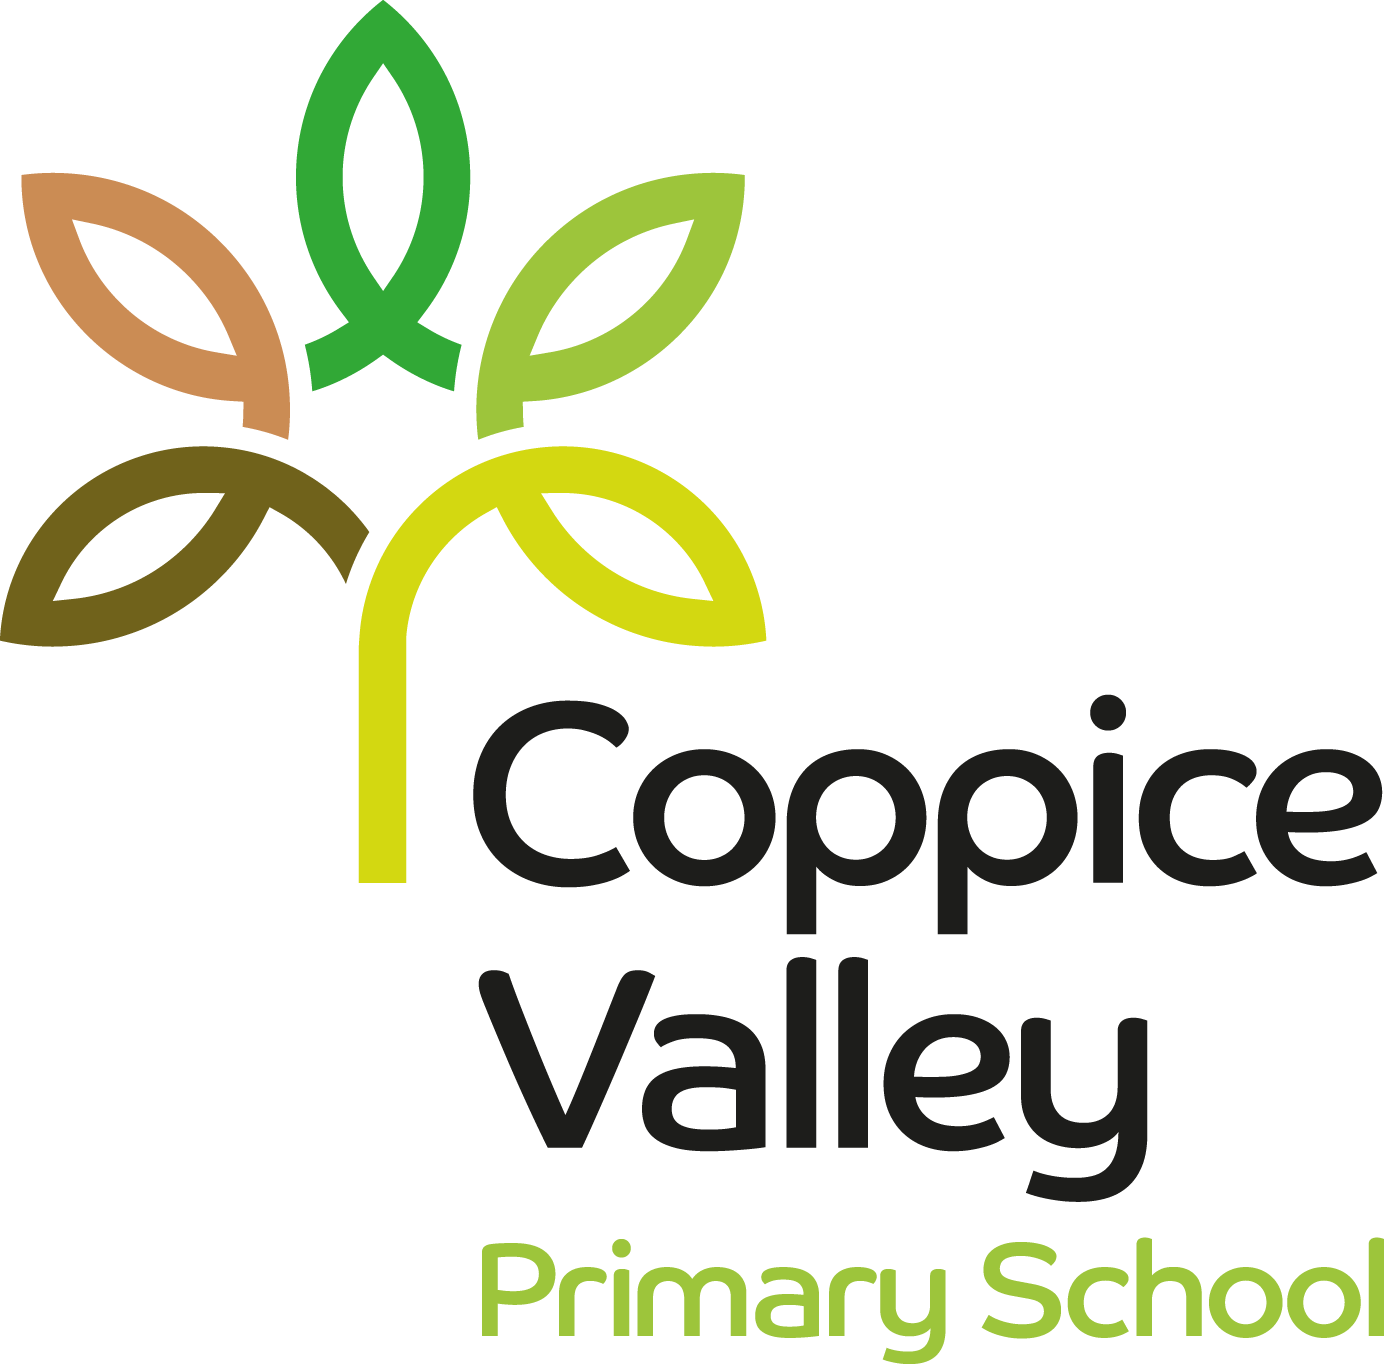 Coppice Valley Primary School